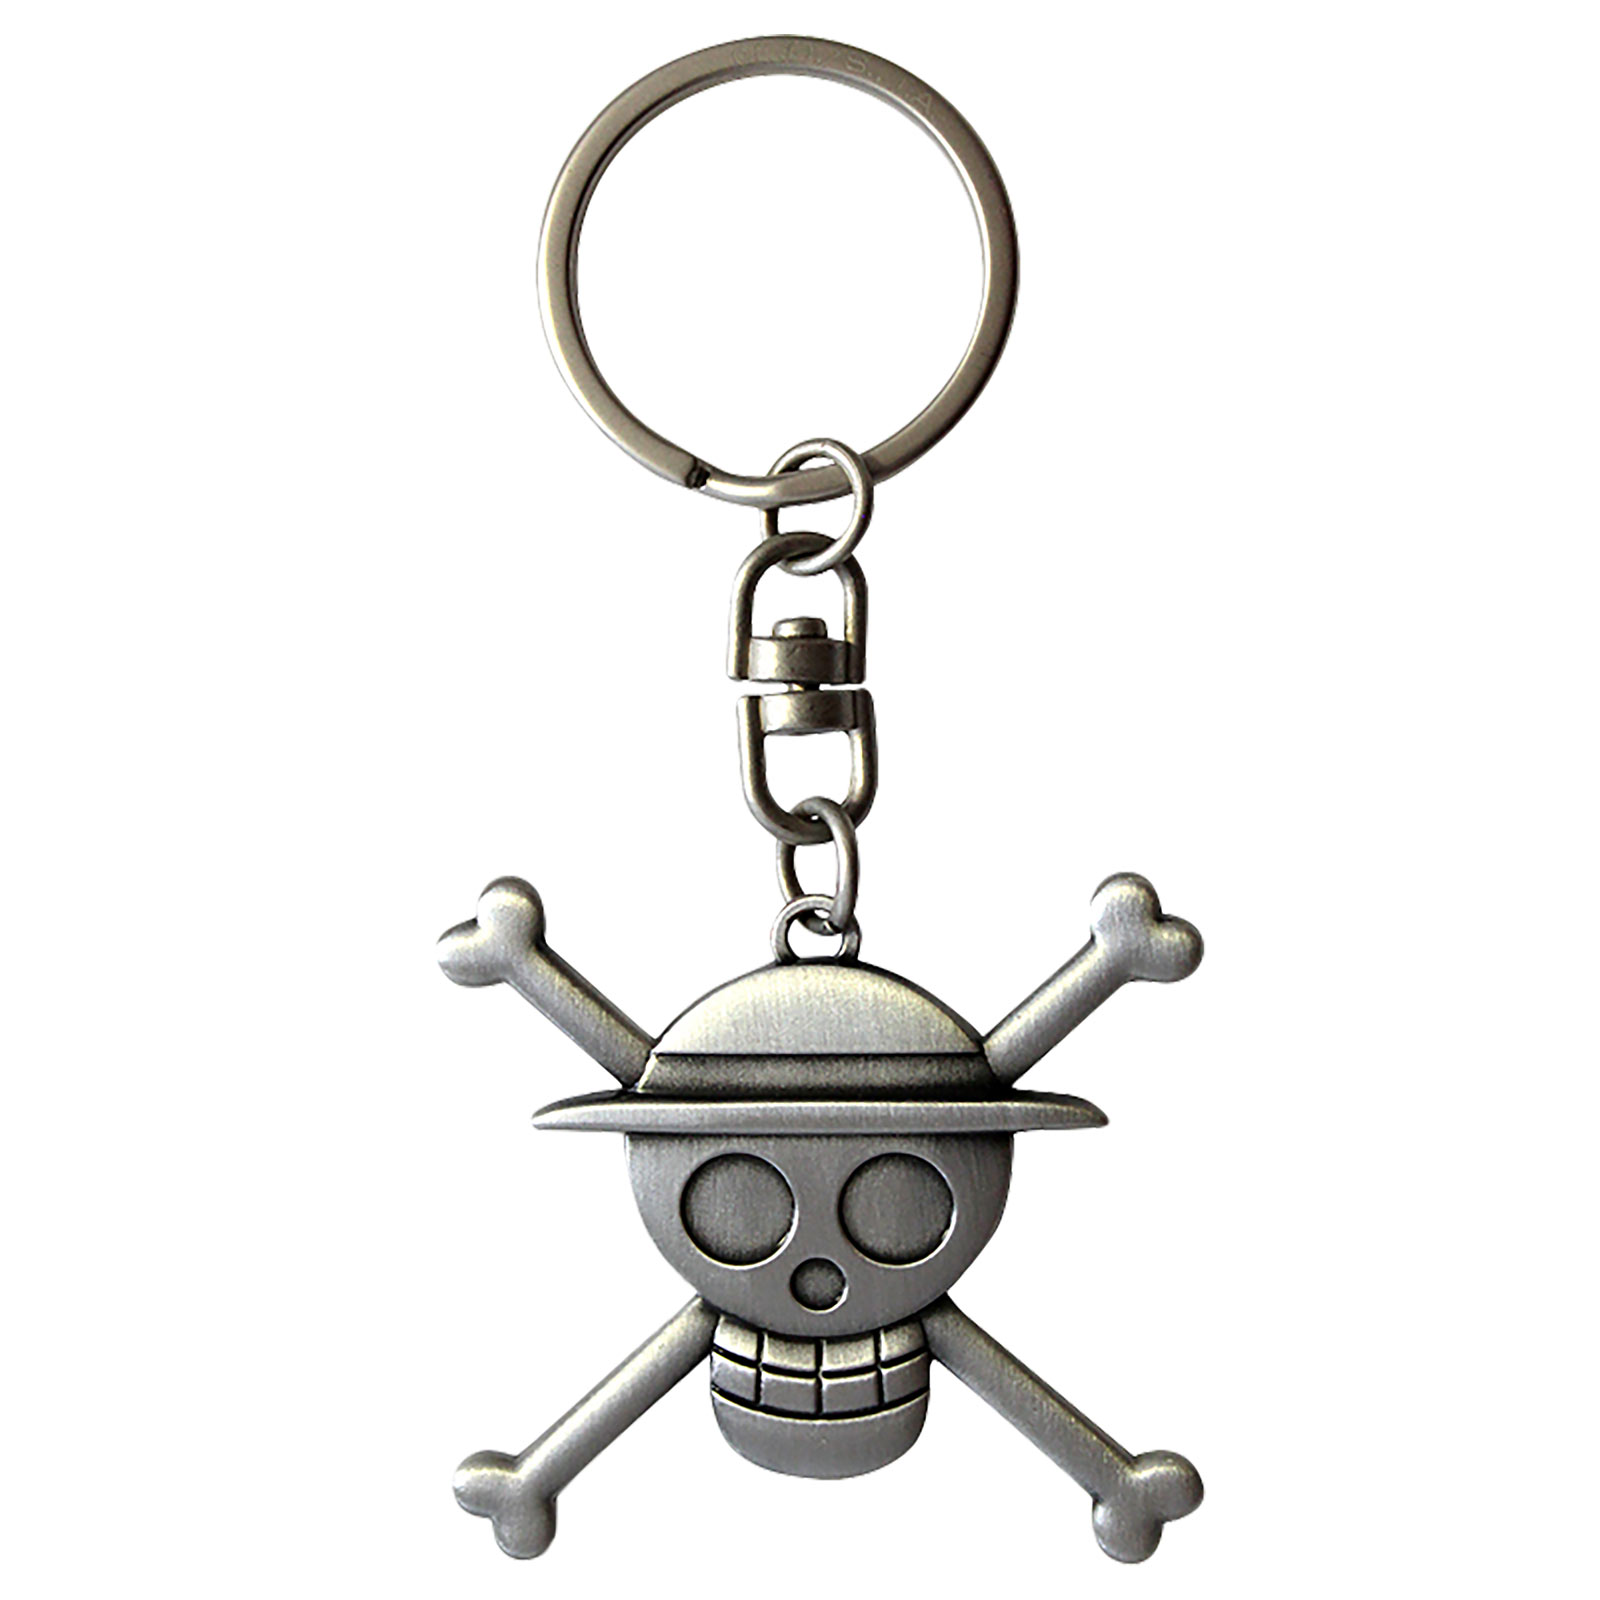 One Piece - Skull Luffy Keychain